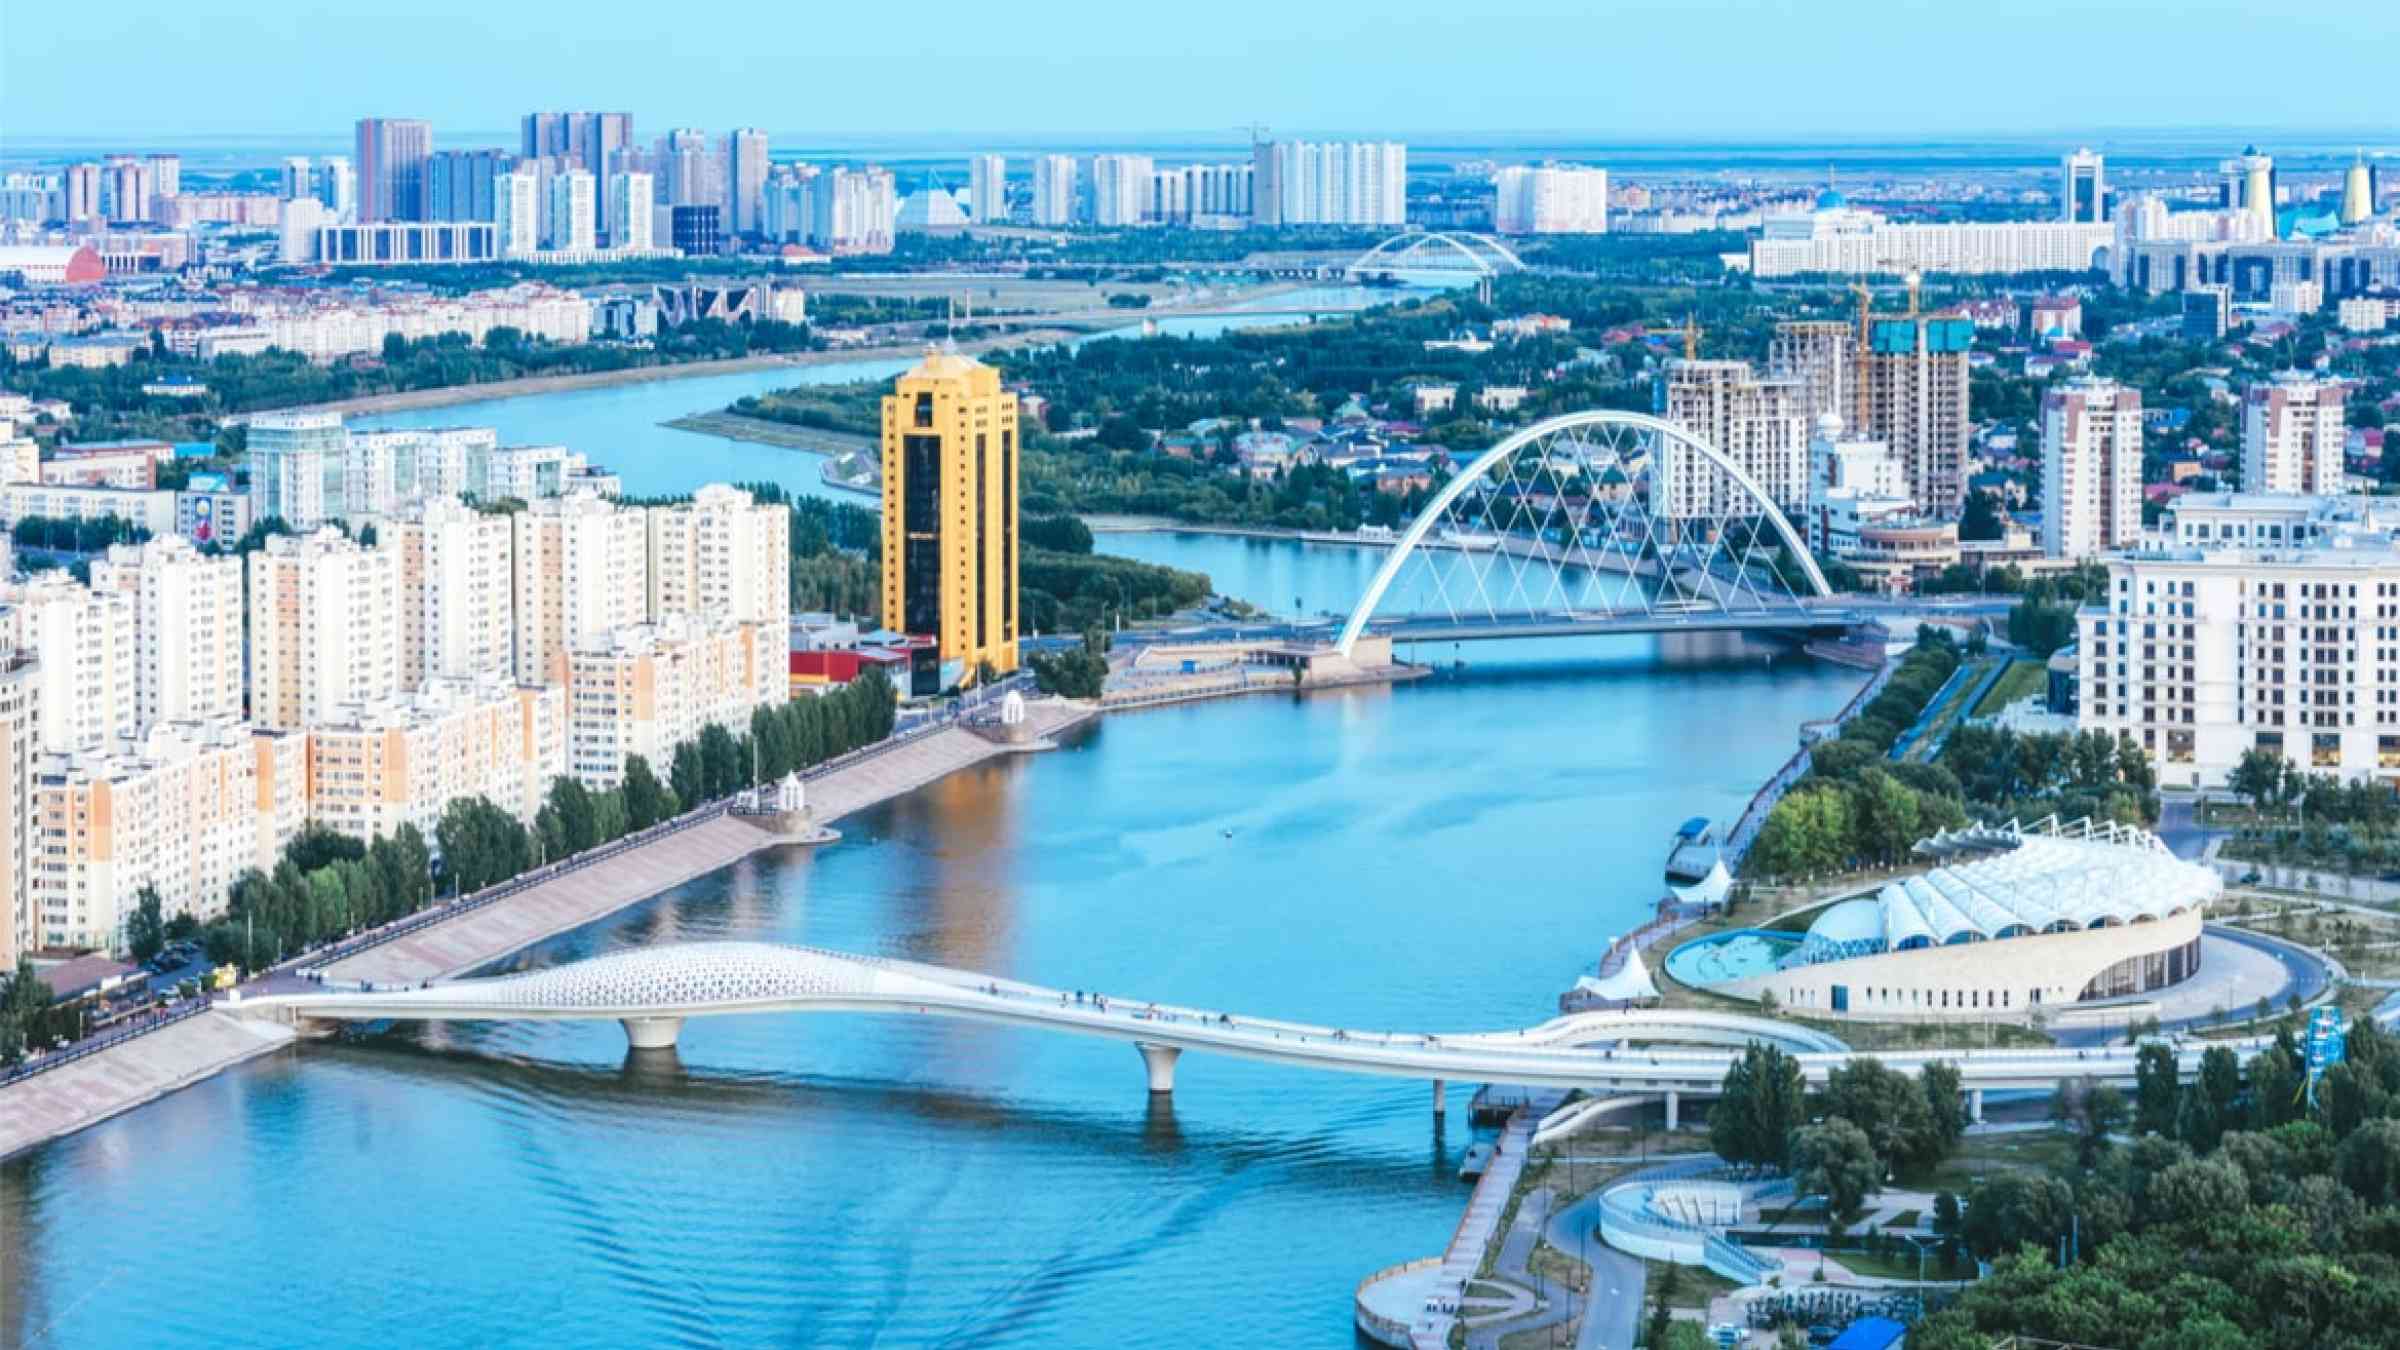 Aerial view of river banks in Nur-Sultant, capital of Kazakhstan